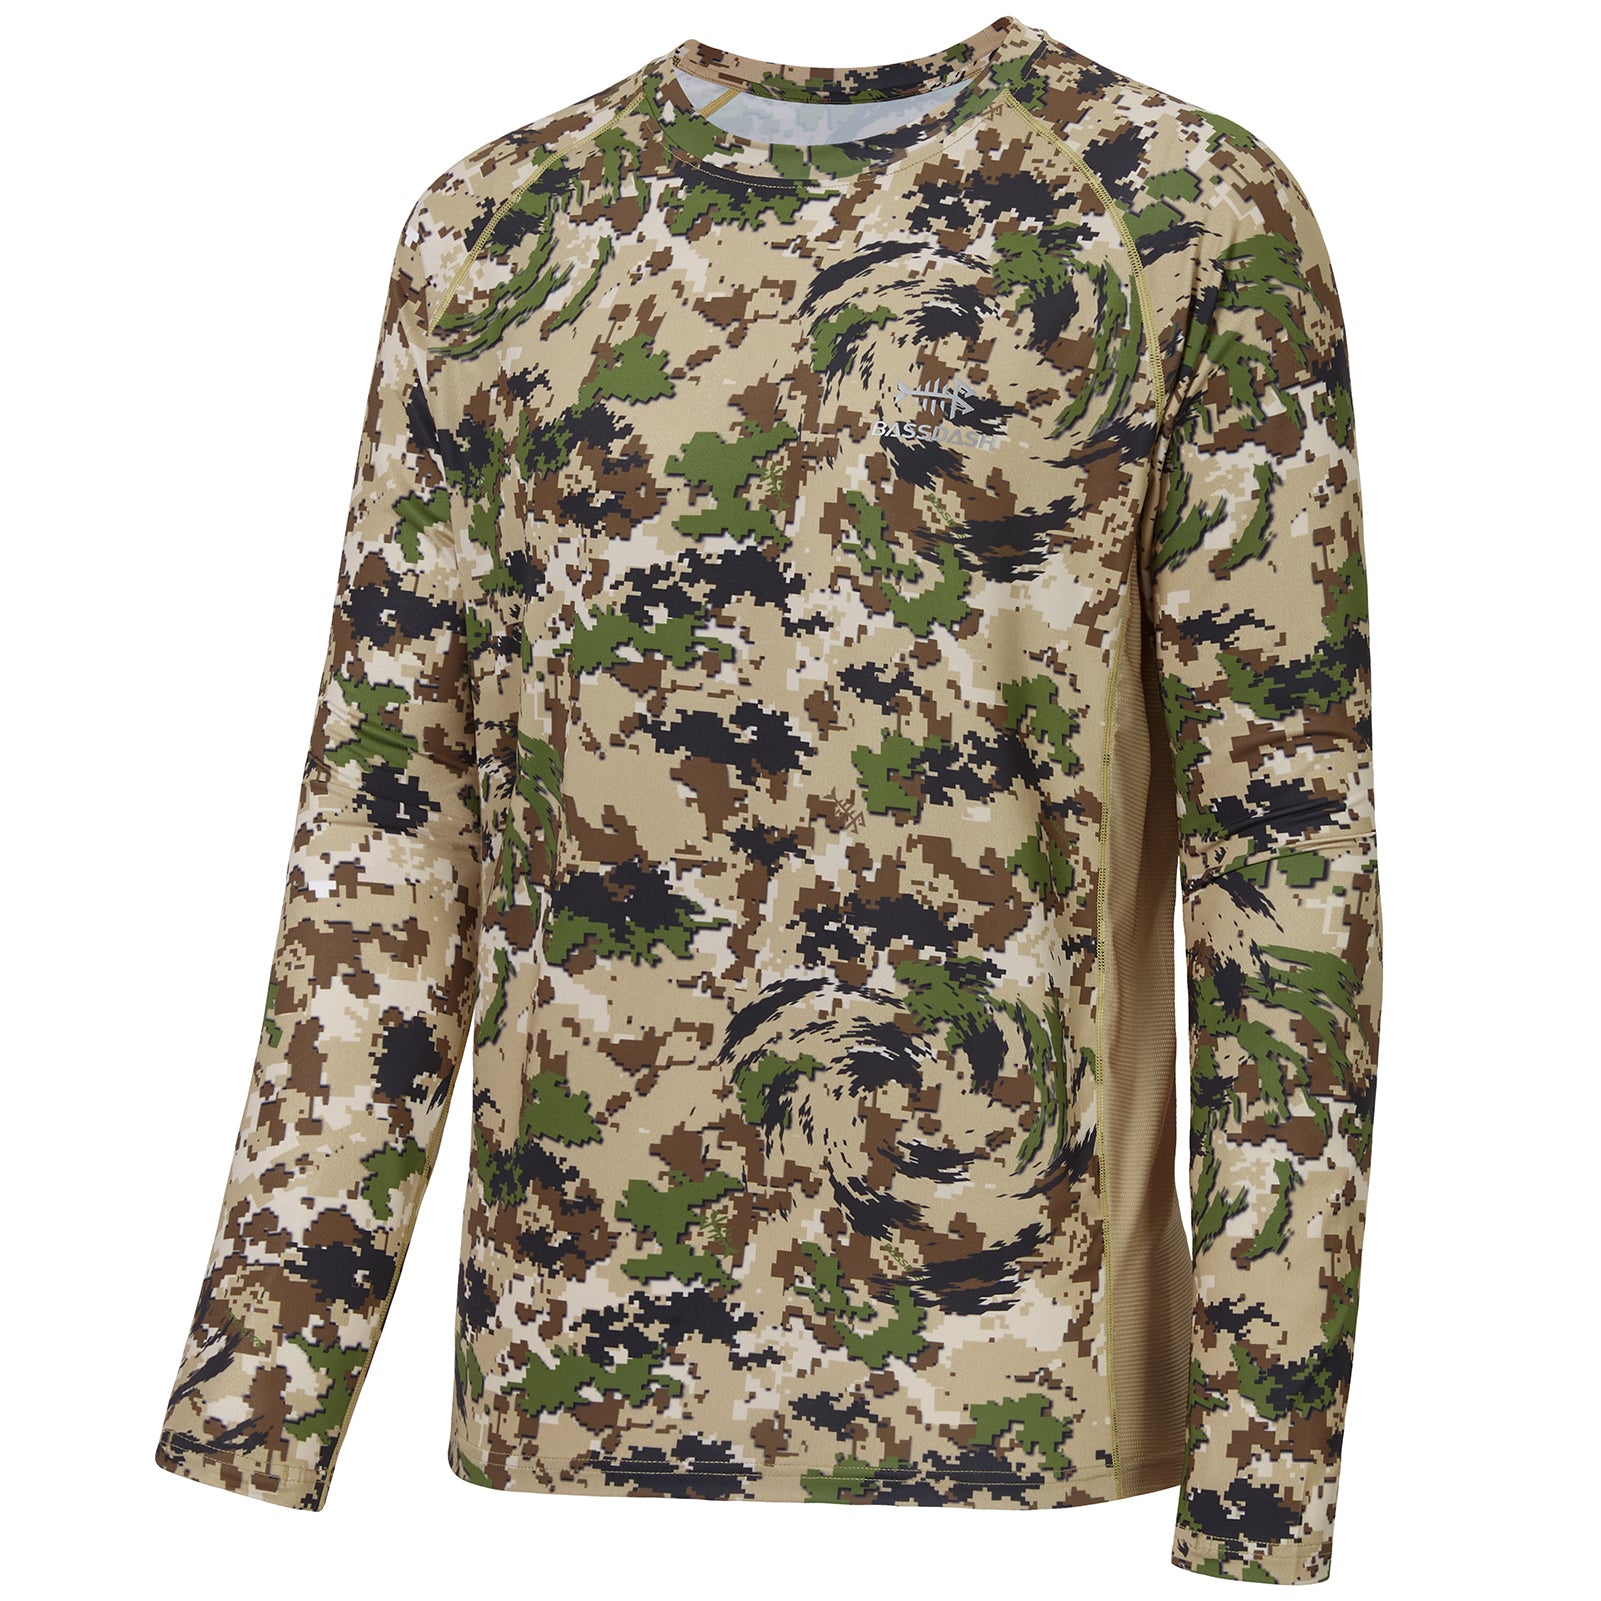 Bass Pro Shops Adult Medium Military Camo Long Sleeve Shirt